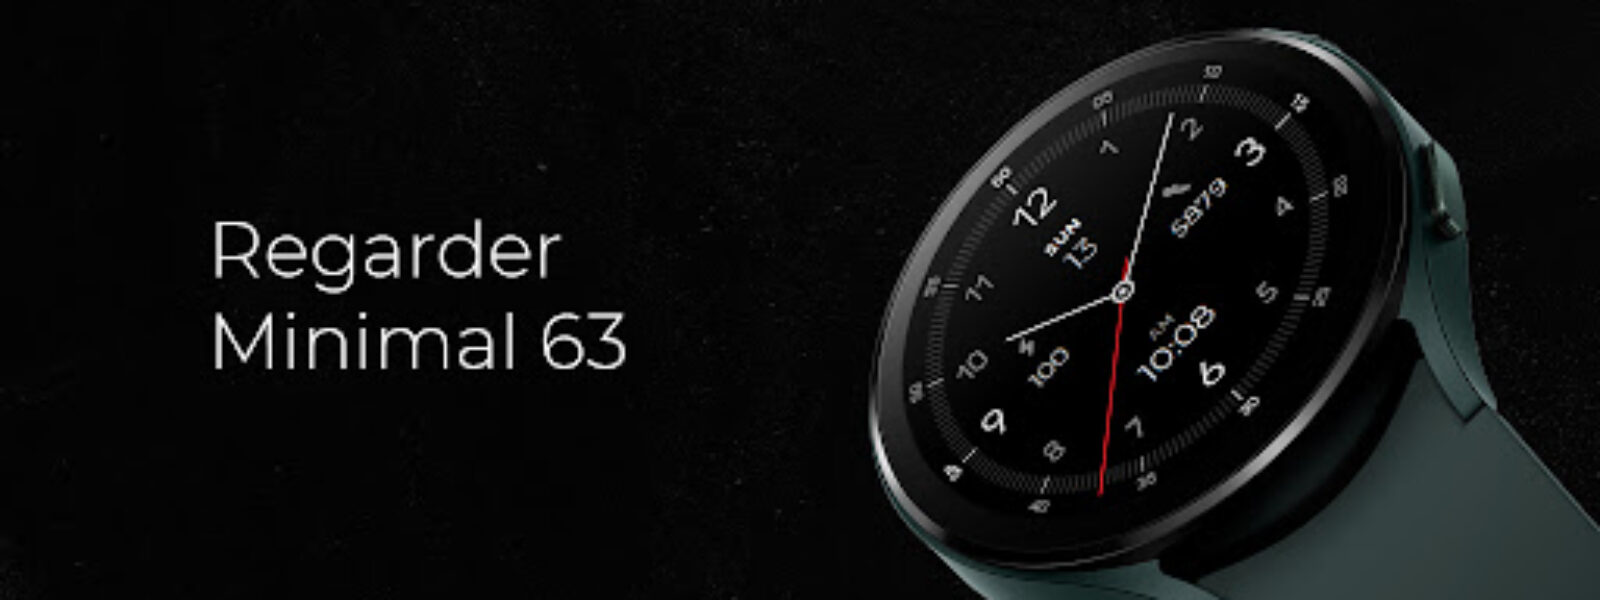 Regarder Minimal 64 Watch Face pentru Android | iOS